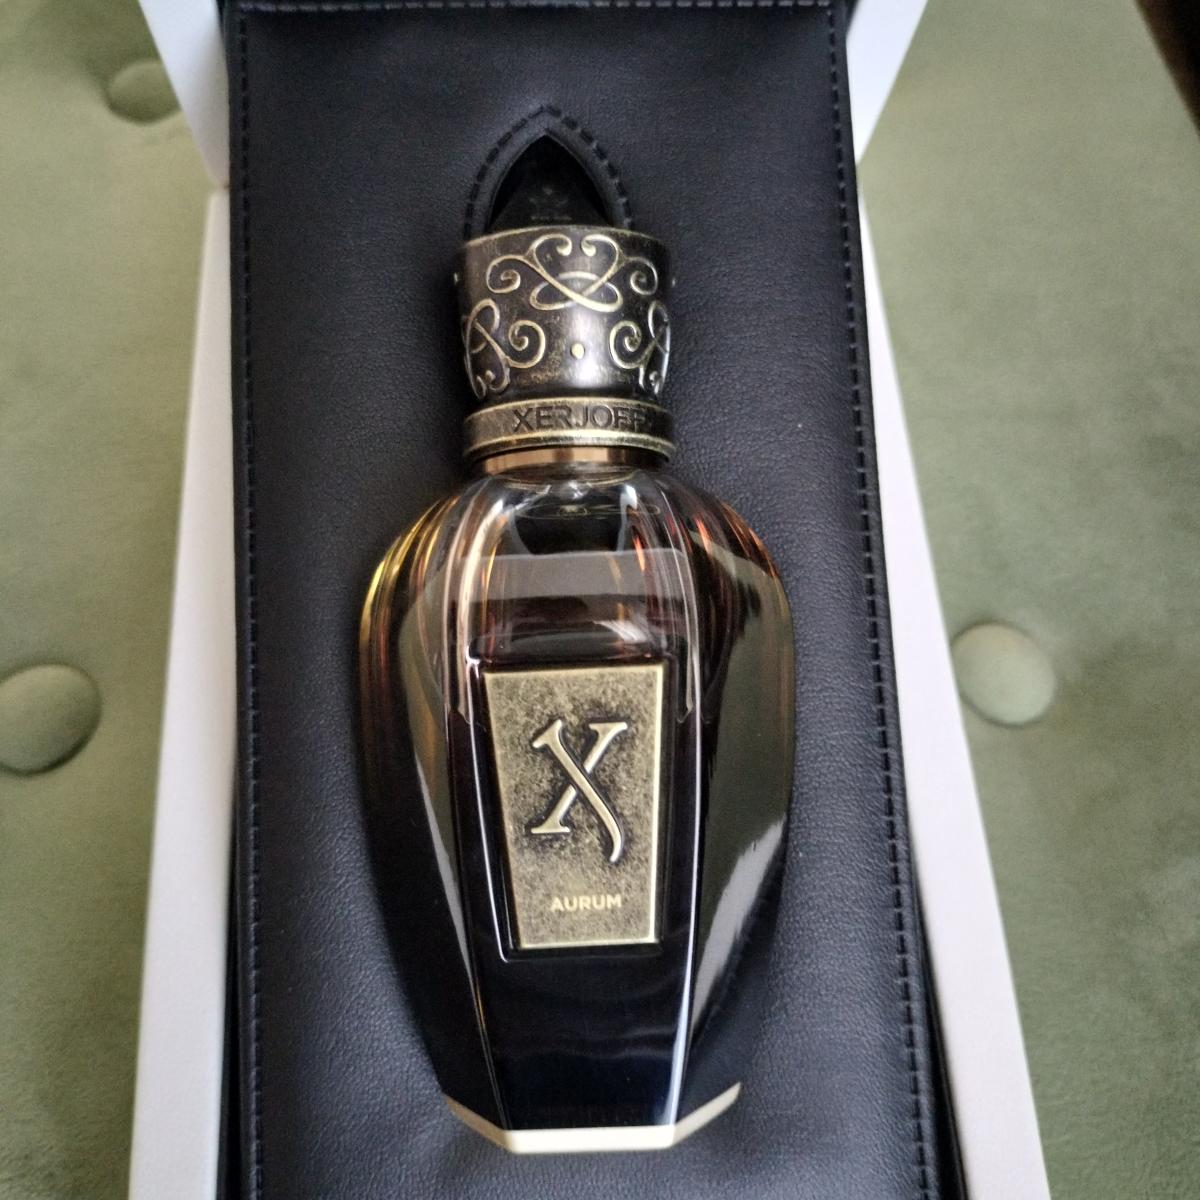 Aurum Xerjoff perfume - a new fragrance for women and men 2023